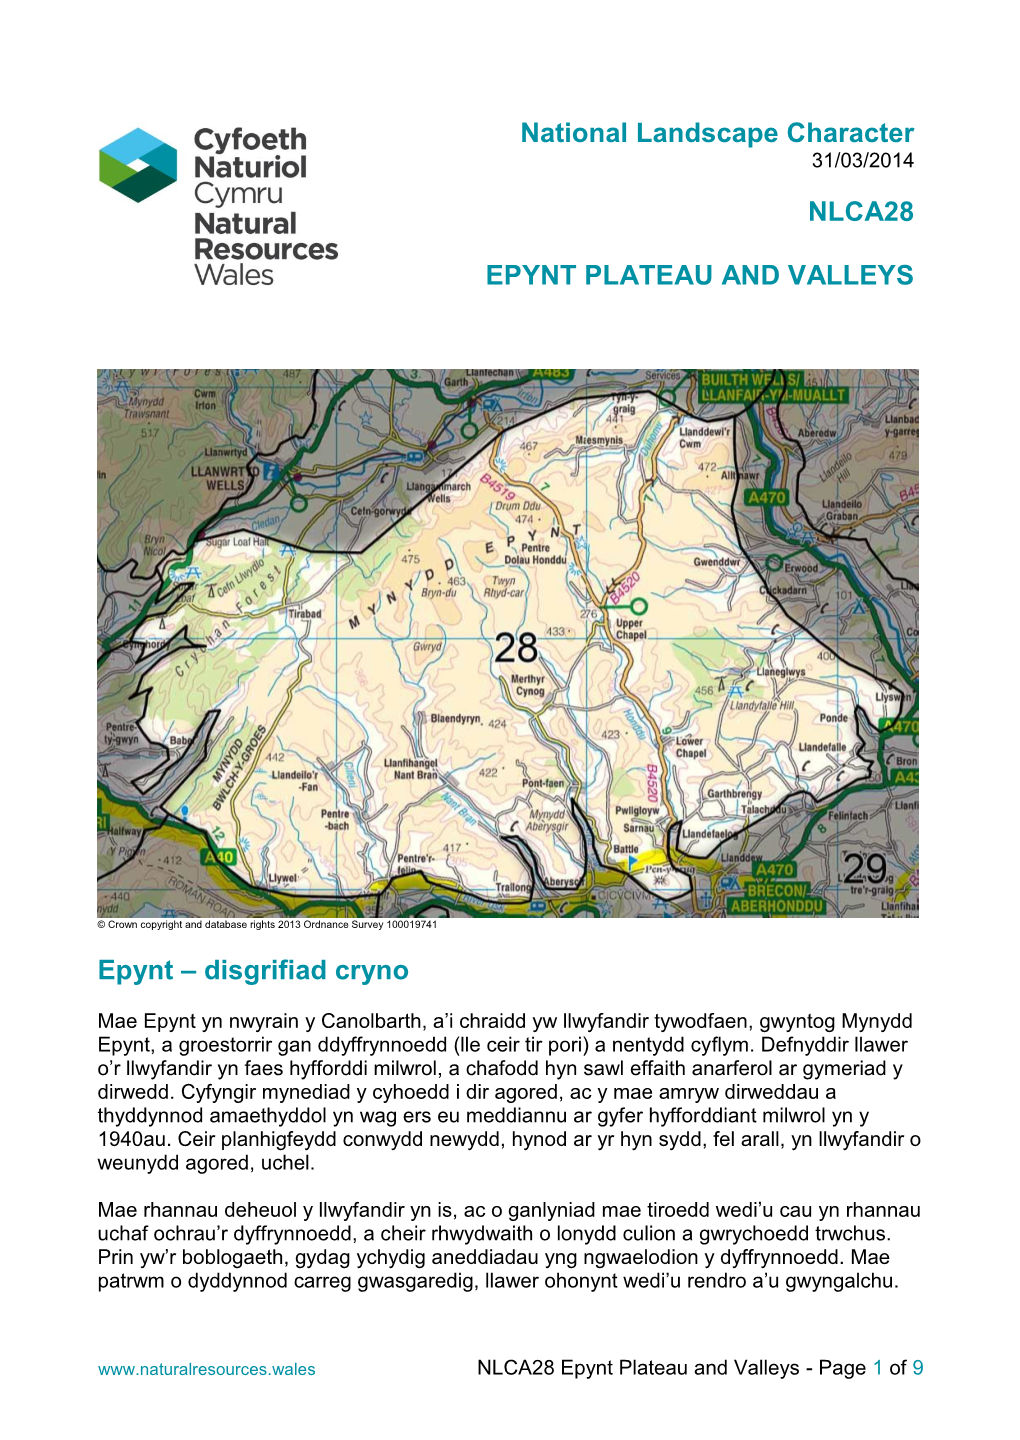 Epynt Plateau and Valleys